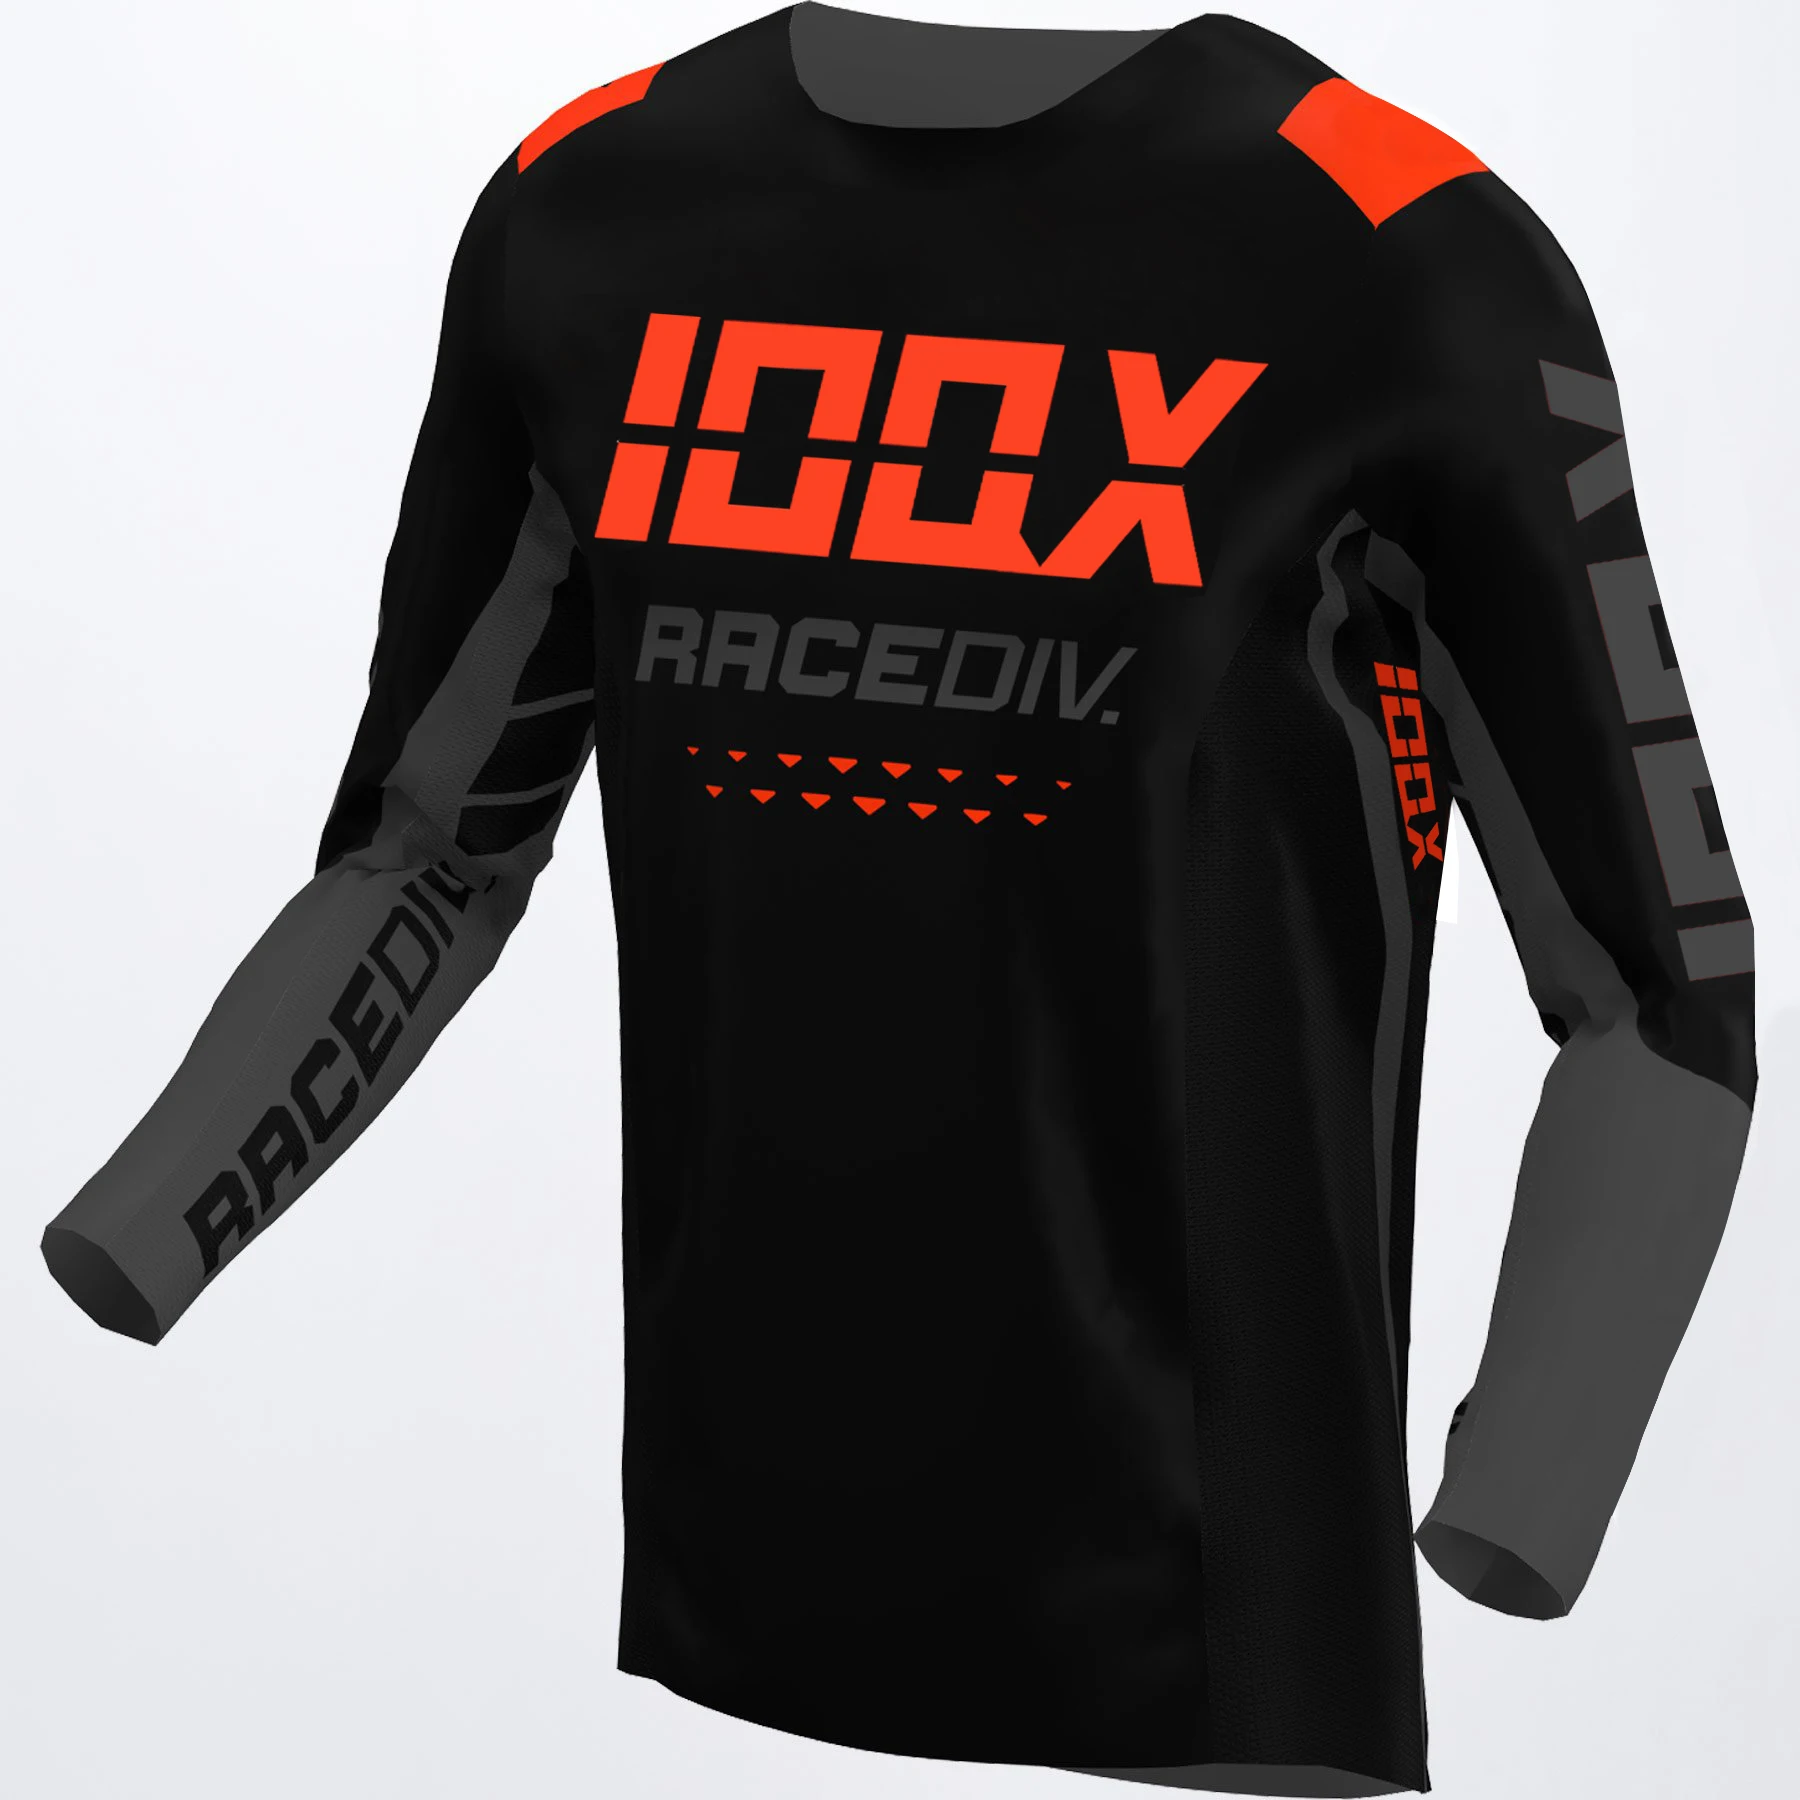 IOQX Black/Char/Nuke Red OFF-ROAD MX ATV MTB Mens Riding Dirt Bike Gear Motocross Racing Jerseys